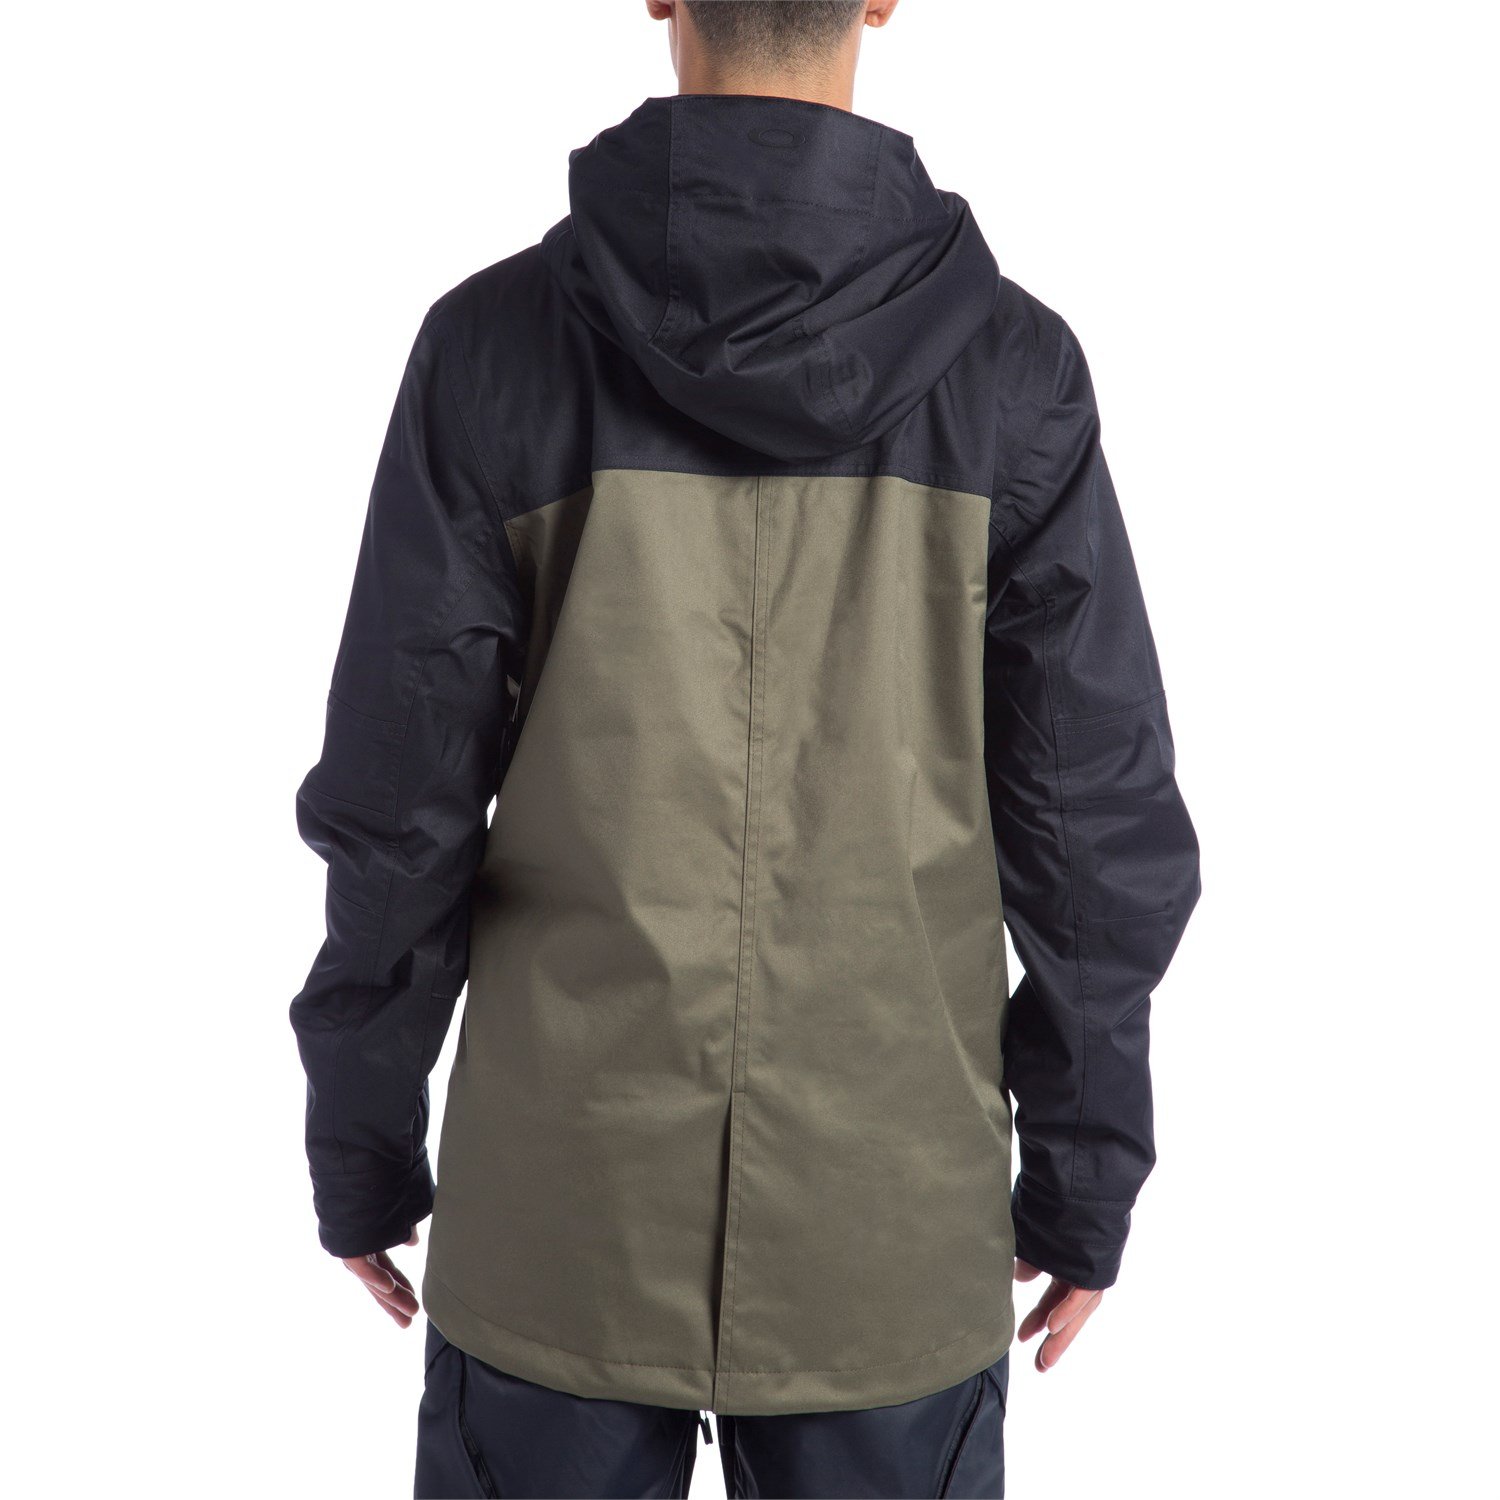 oakley timber 15k biozone shell snowboard jacket